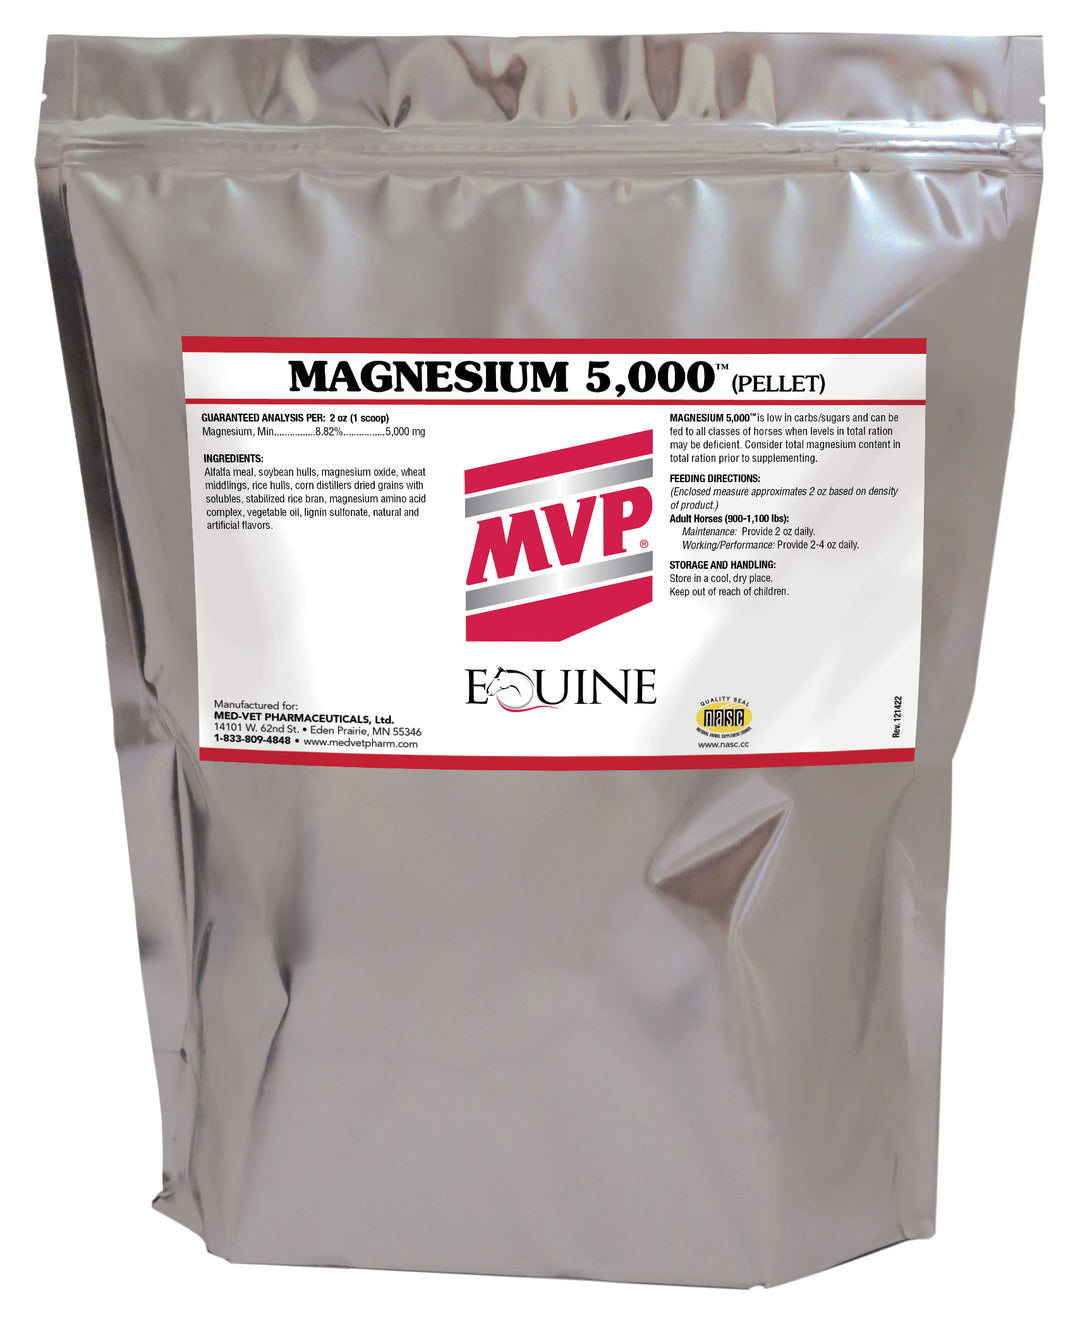 MED-VET Magnesium 5,000 (Pellet) - MVP Horse Supplement (10 lbs, pellet). Digestive Health, Pellet, Calmer, Healthier Horses